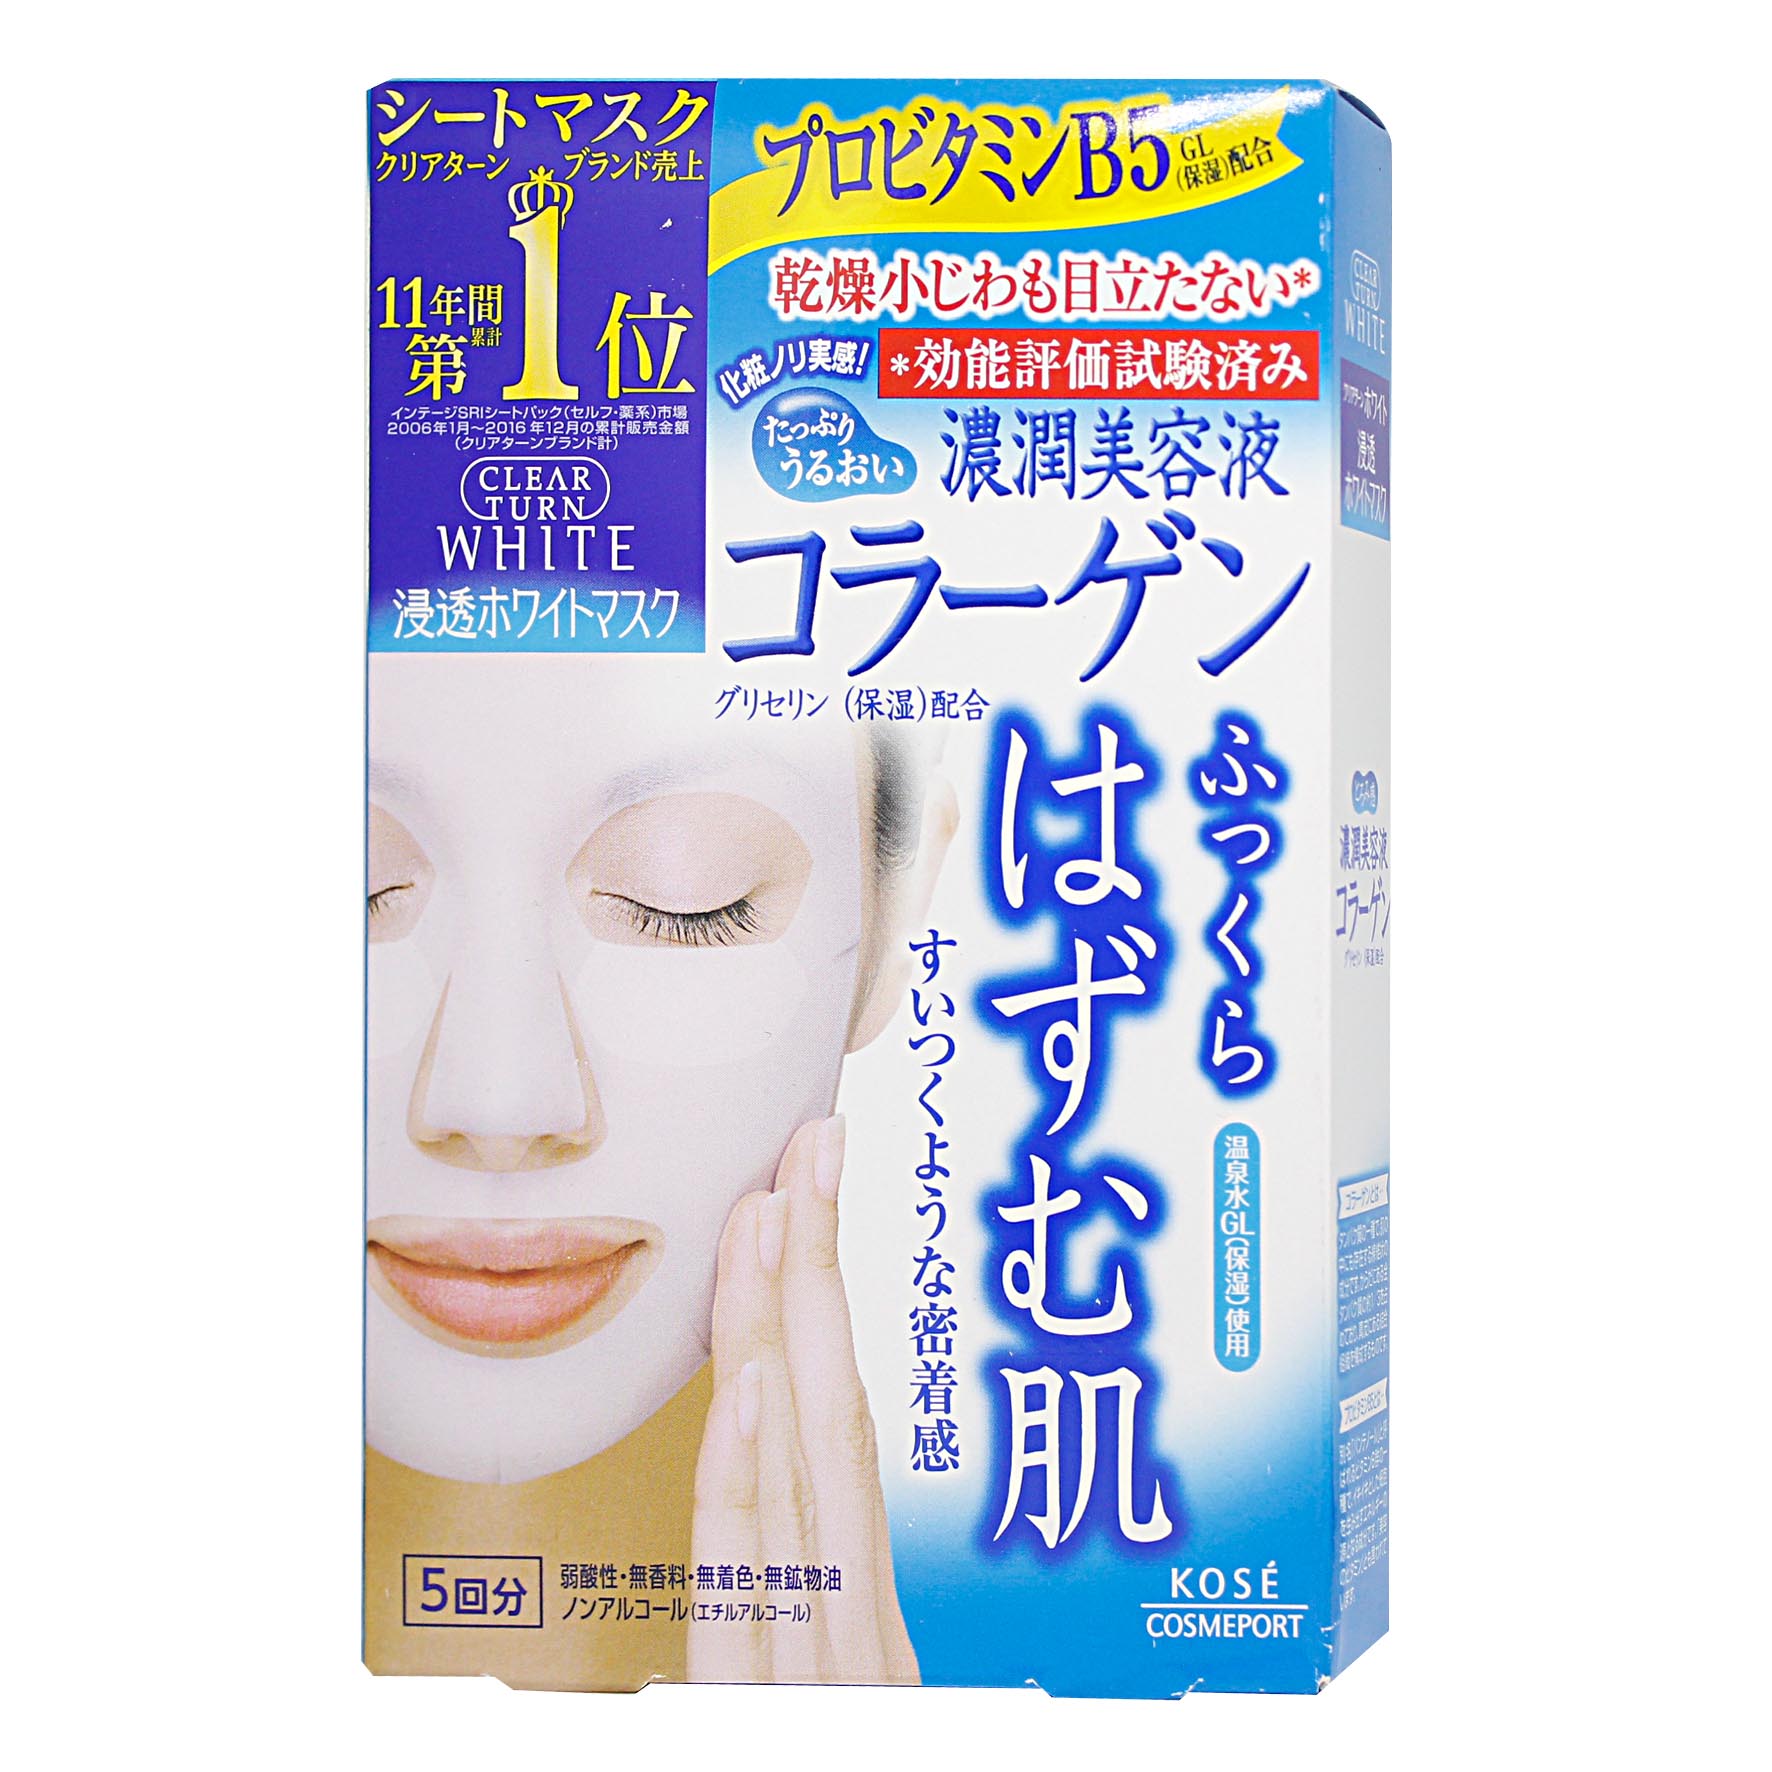 kose-clear-turn-white-mask-collagen-5-sheets-57-1609227351.jpg